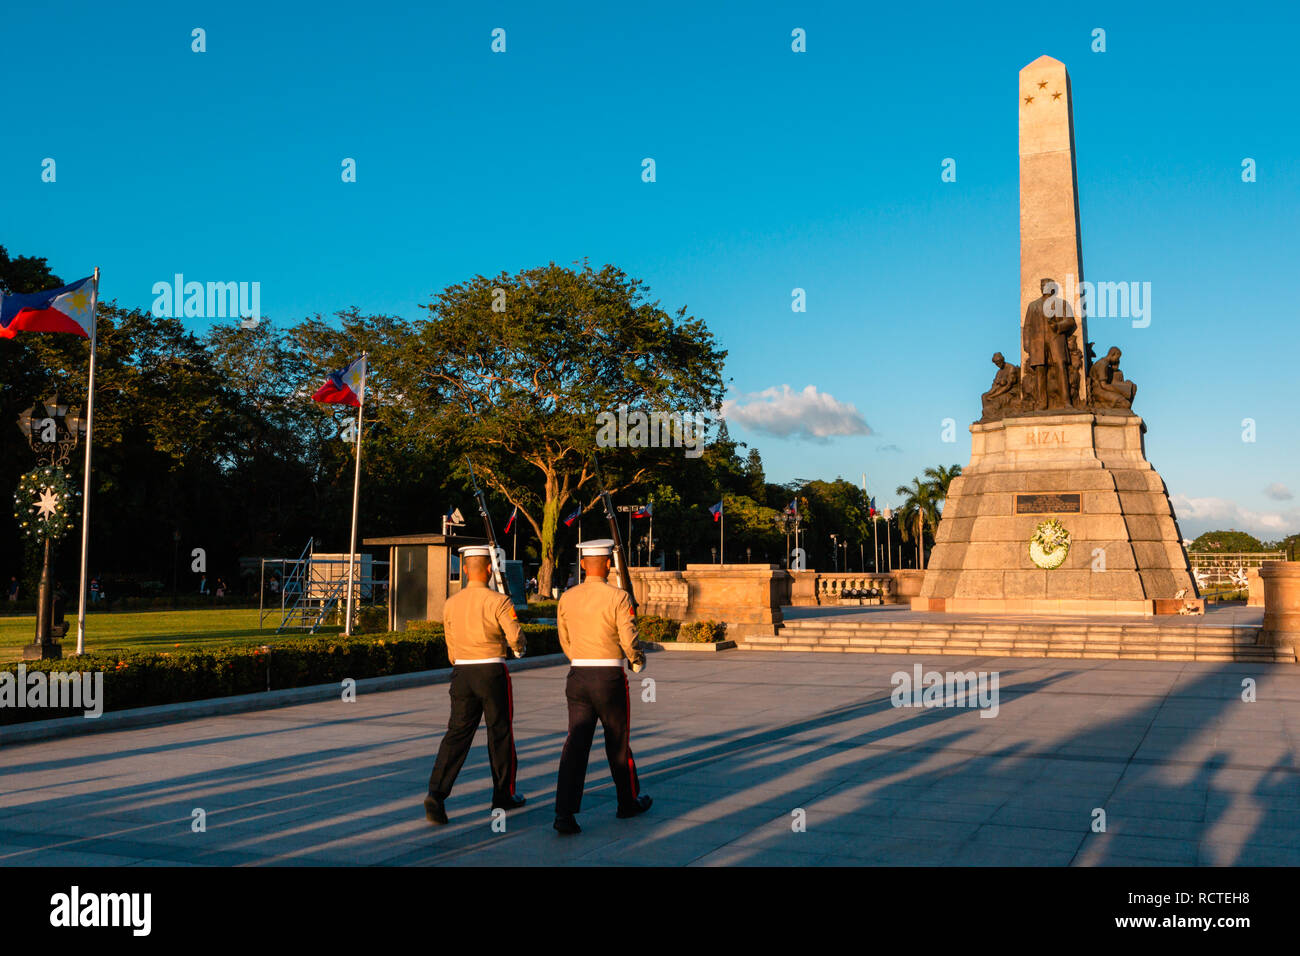 Monument in memory of Jose Rizal (National hero) at Rizal park in Manila, Philippines Stock Photo